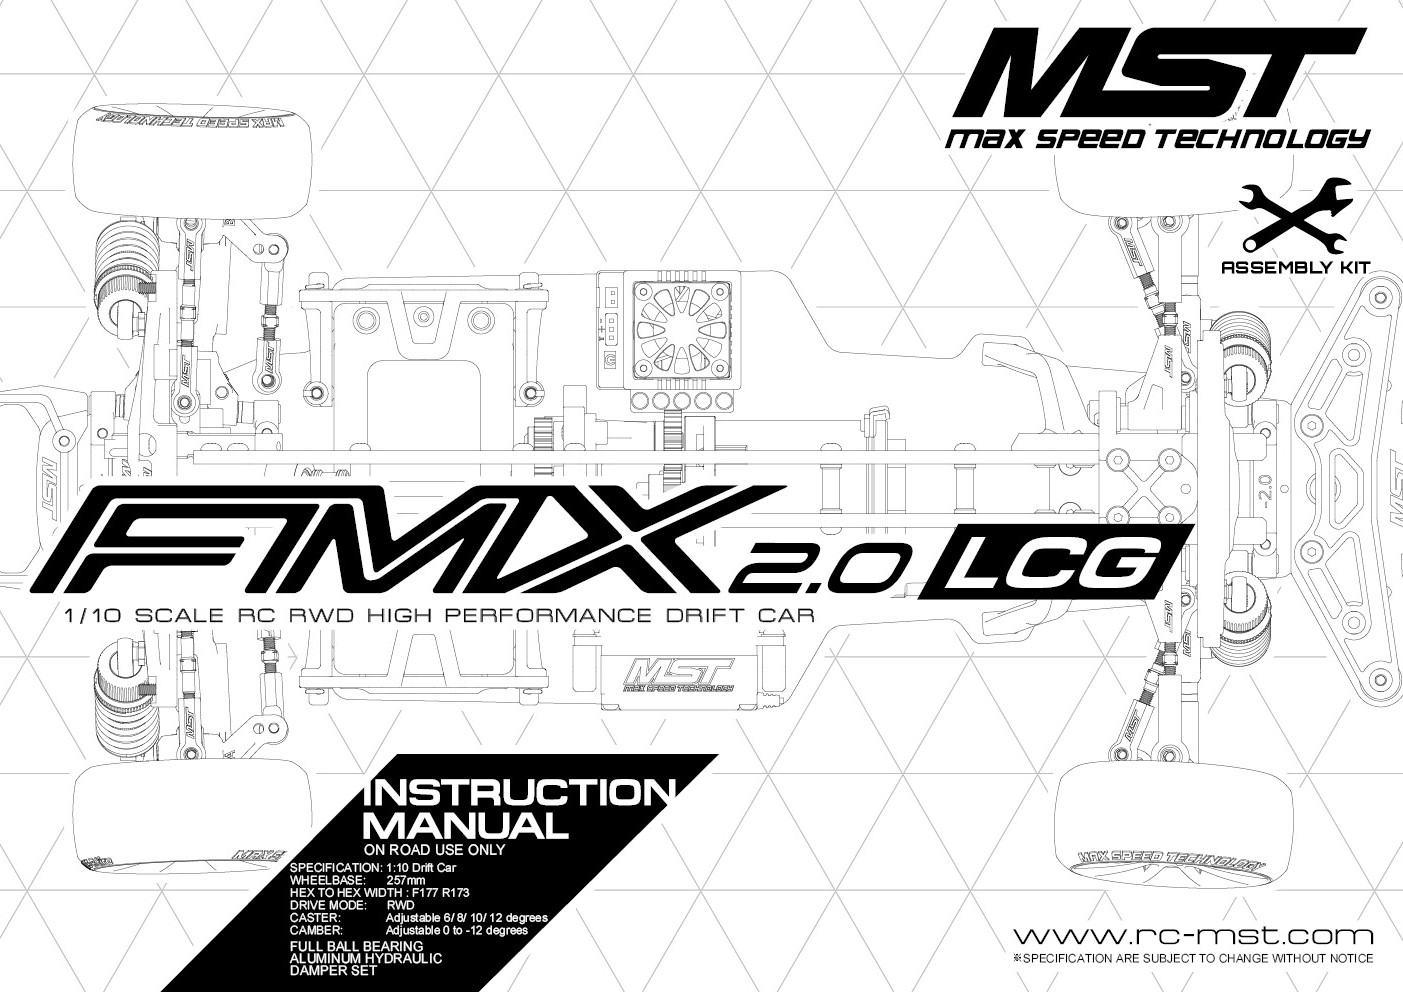 Max Speed Technology: FMX 2.0 KMW - Drift Video - Hobbymedia